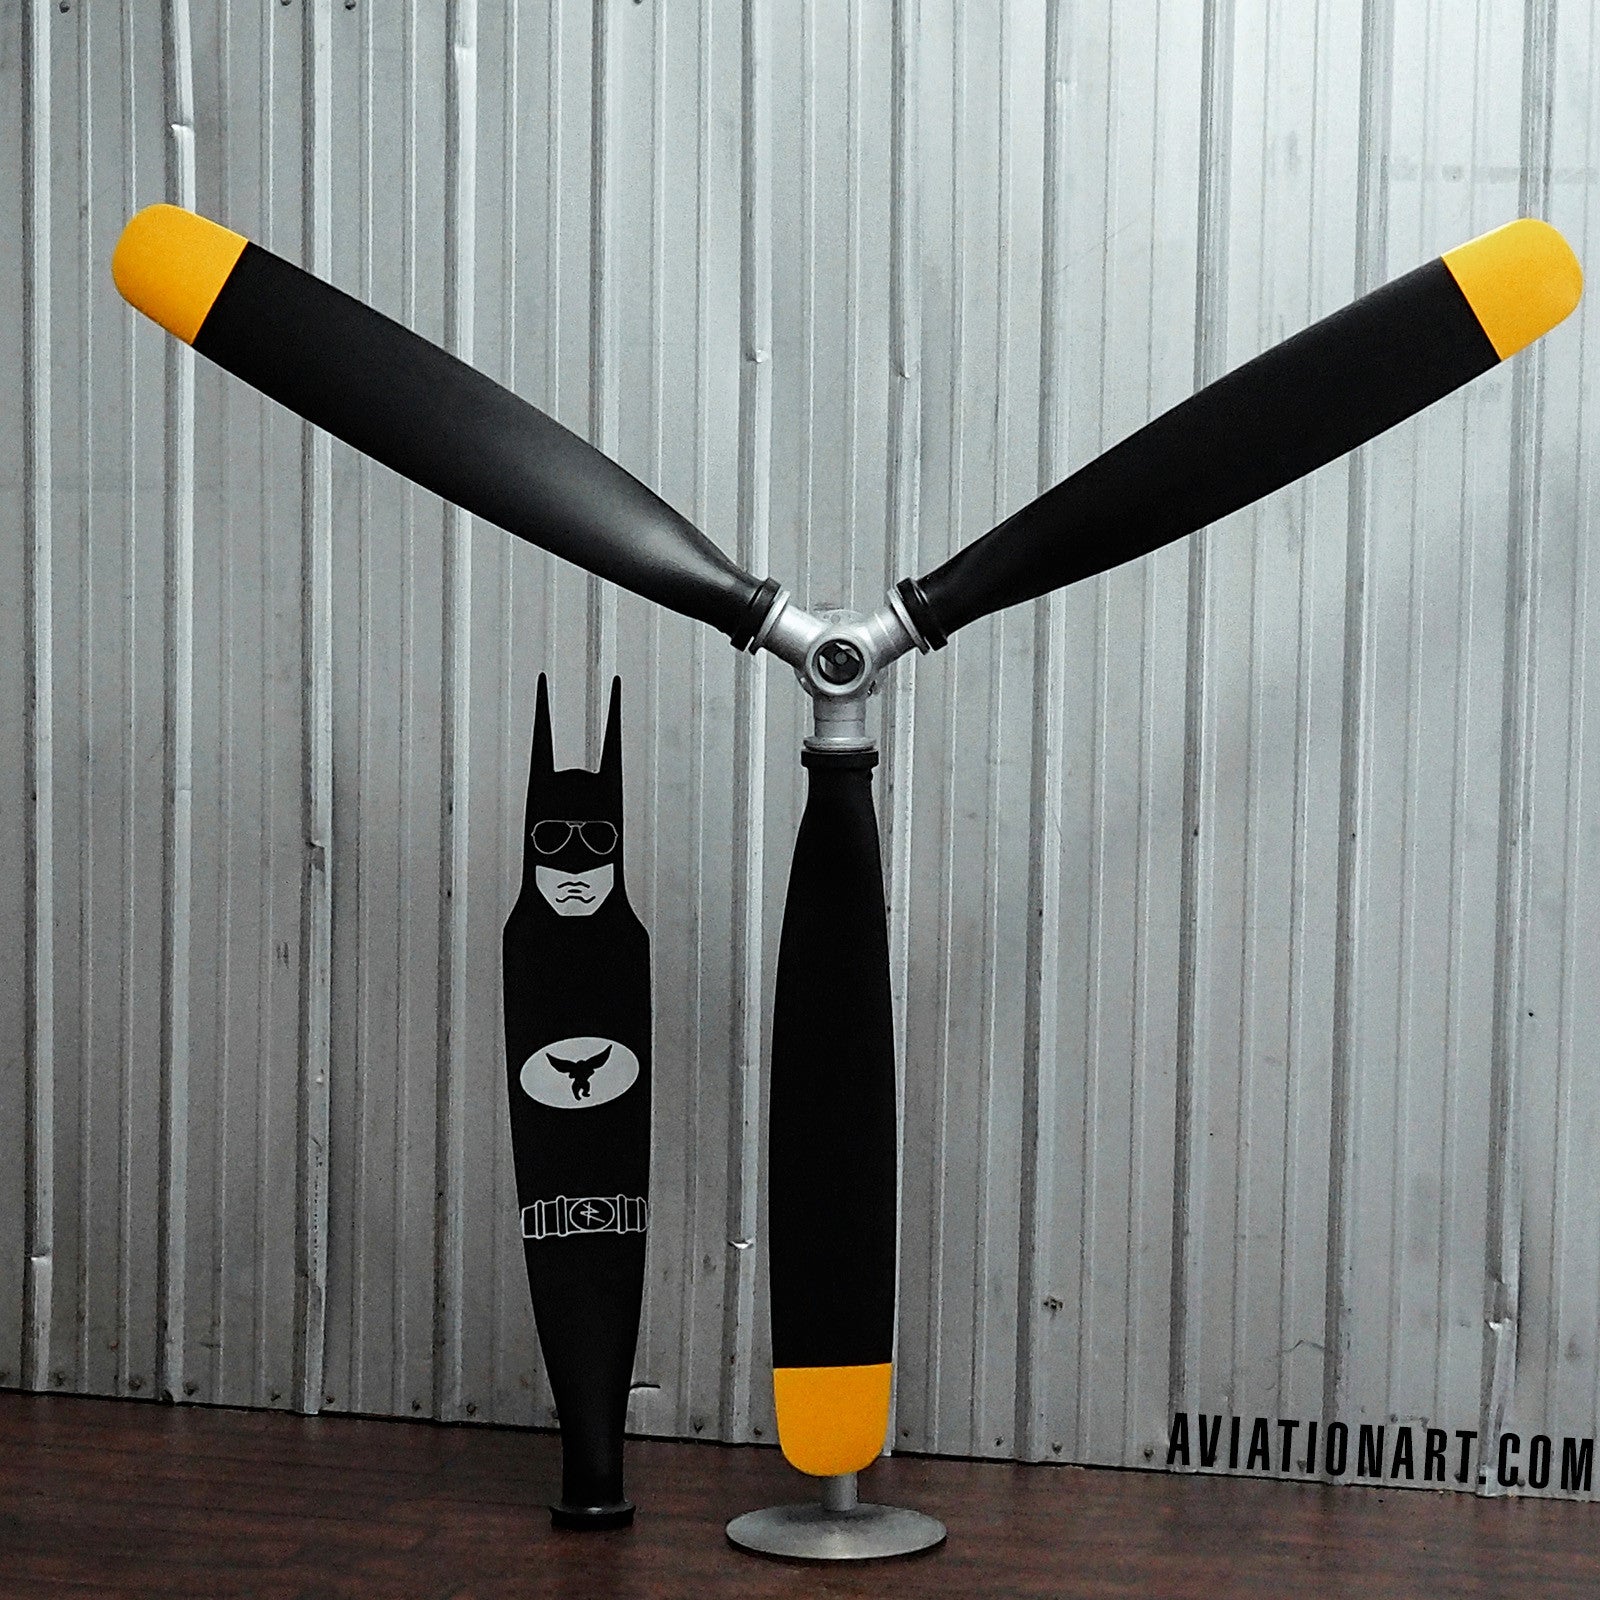 3-Bladed Warbird Mini aviation art Airplane Propeller Wall Display